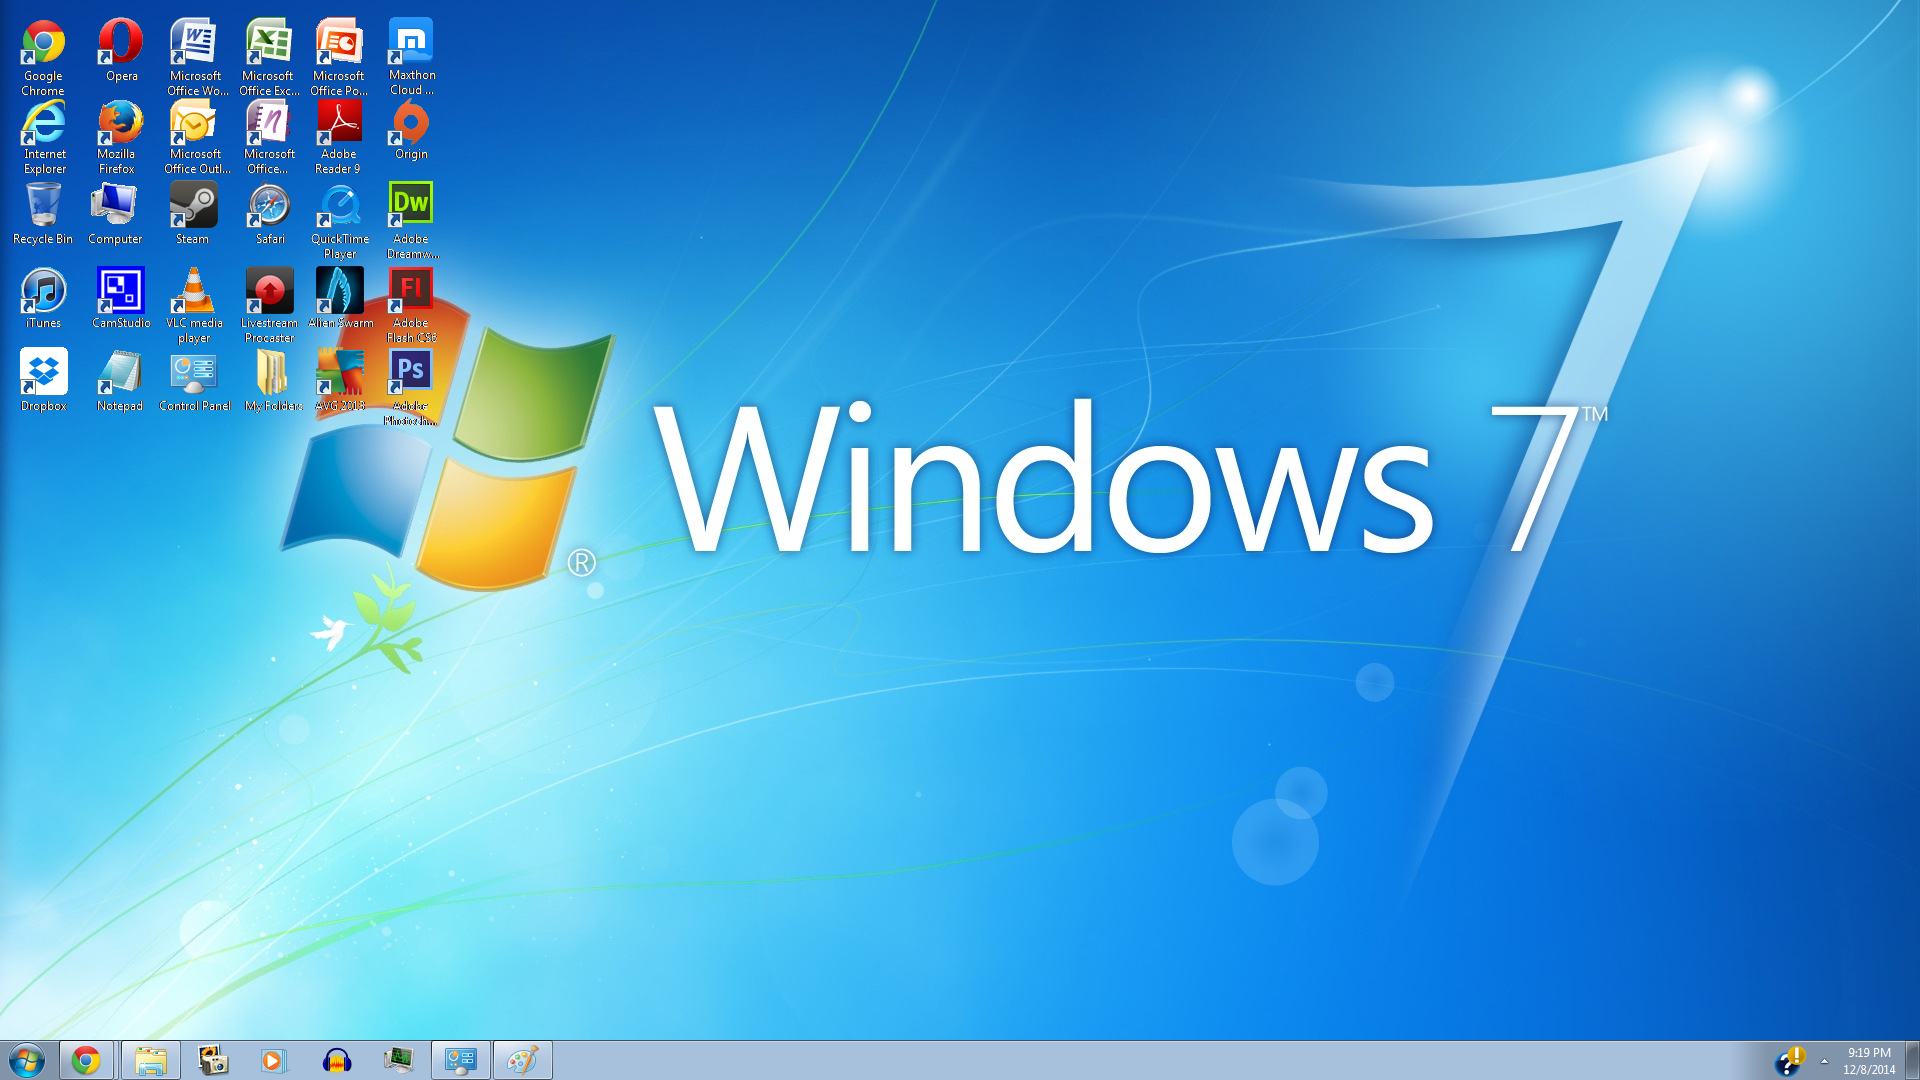 Windows семерка. Виндовс 7. Windows 7 рабочий стол. Windows 7 Скриншот. Windows 7 Интерфейс.